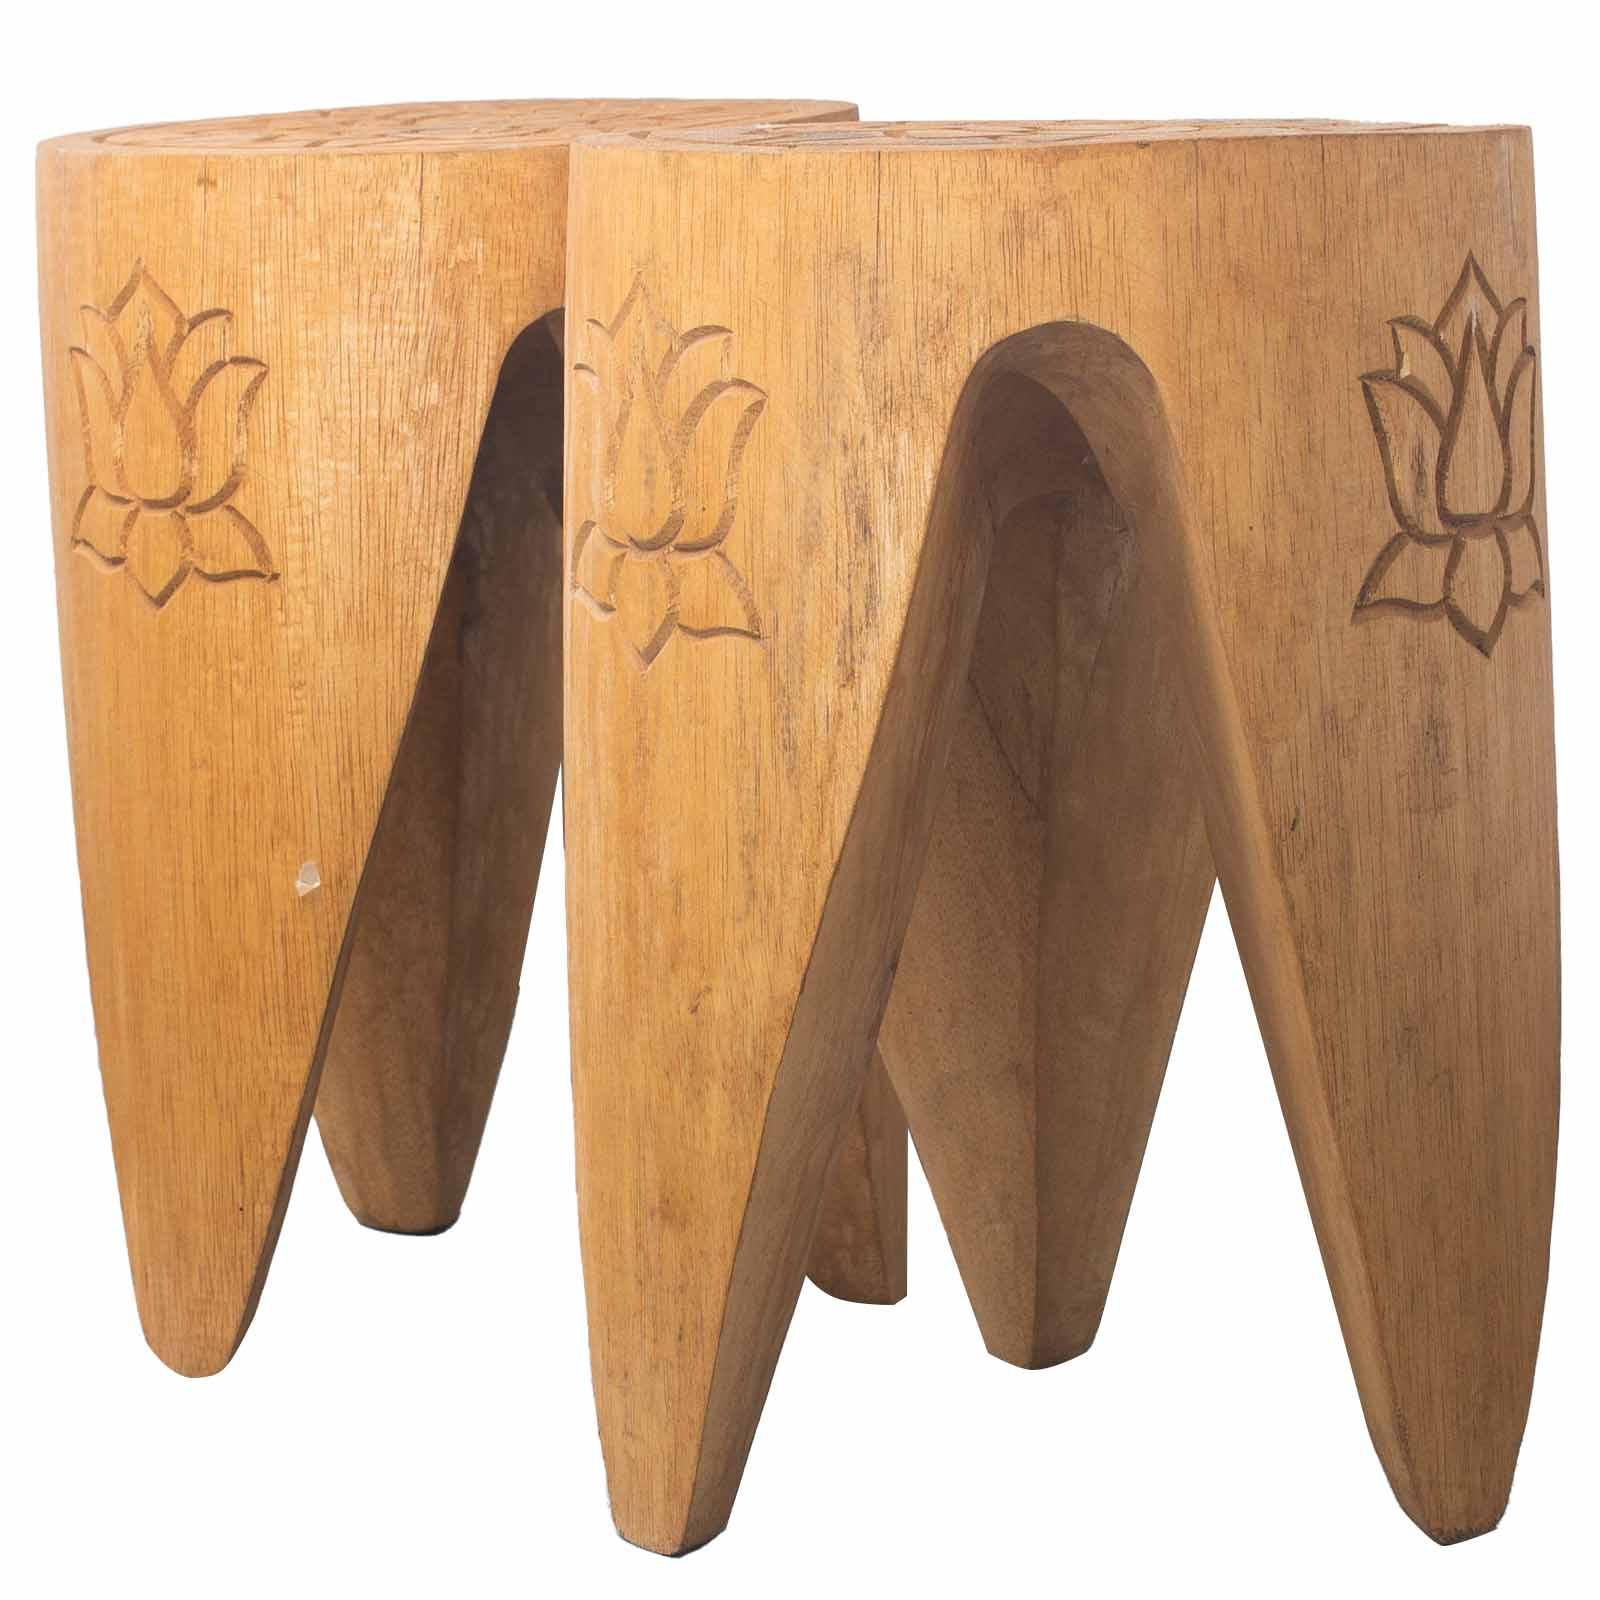 Interlocking Table/Stool set of 2 - Natural - Charming Spaces